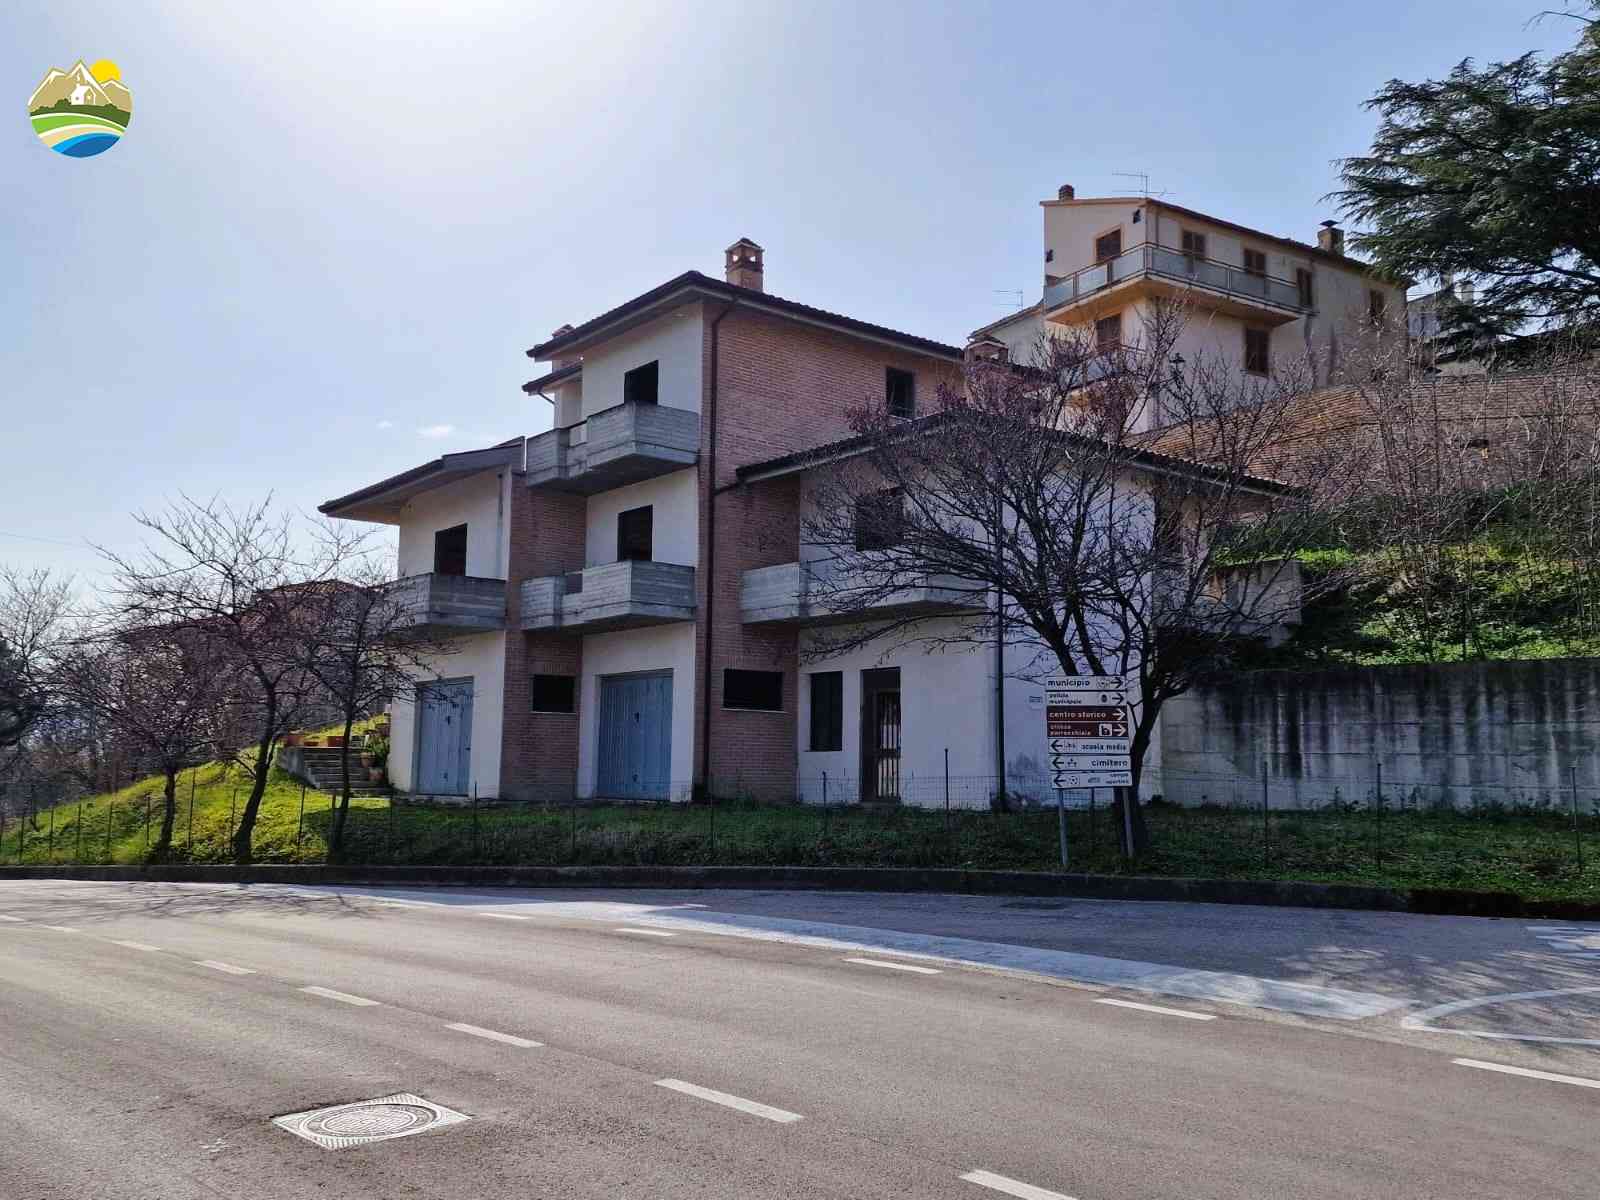 Villa Villa in vendita Castilenti (TE), Villa Mandorlo - Castilenti - EUR 129.450 750